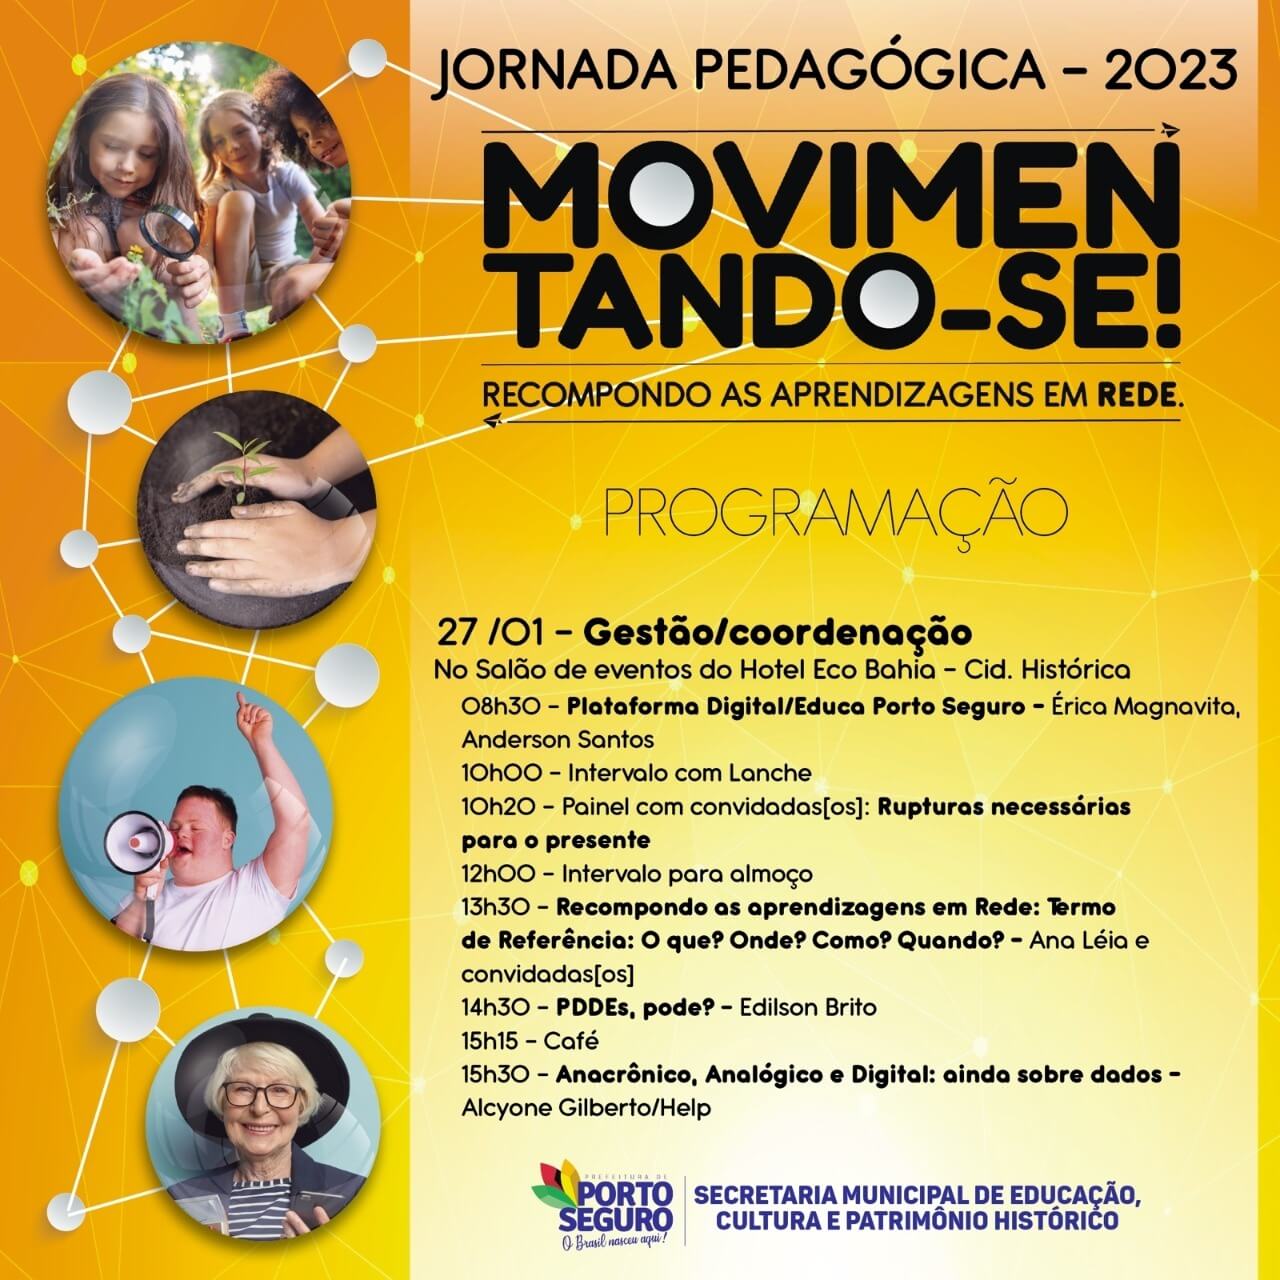 PORTO SEGURO PROMOVE A JORNADA PEDAGÓGICA 2023 7